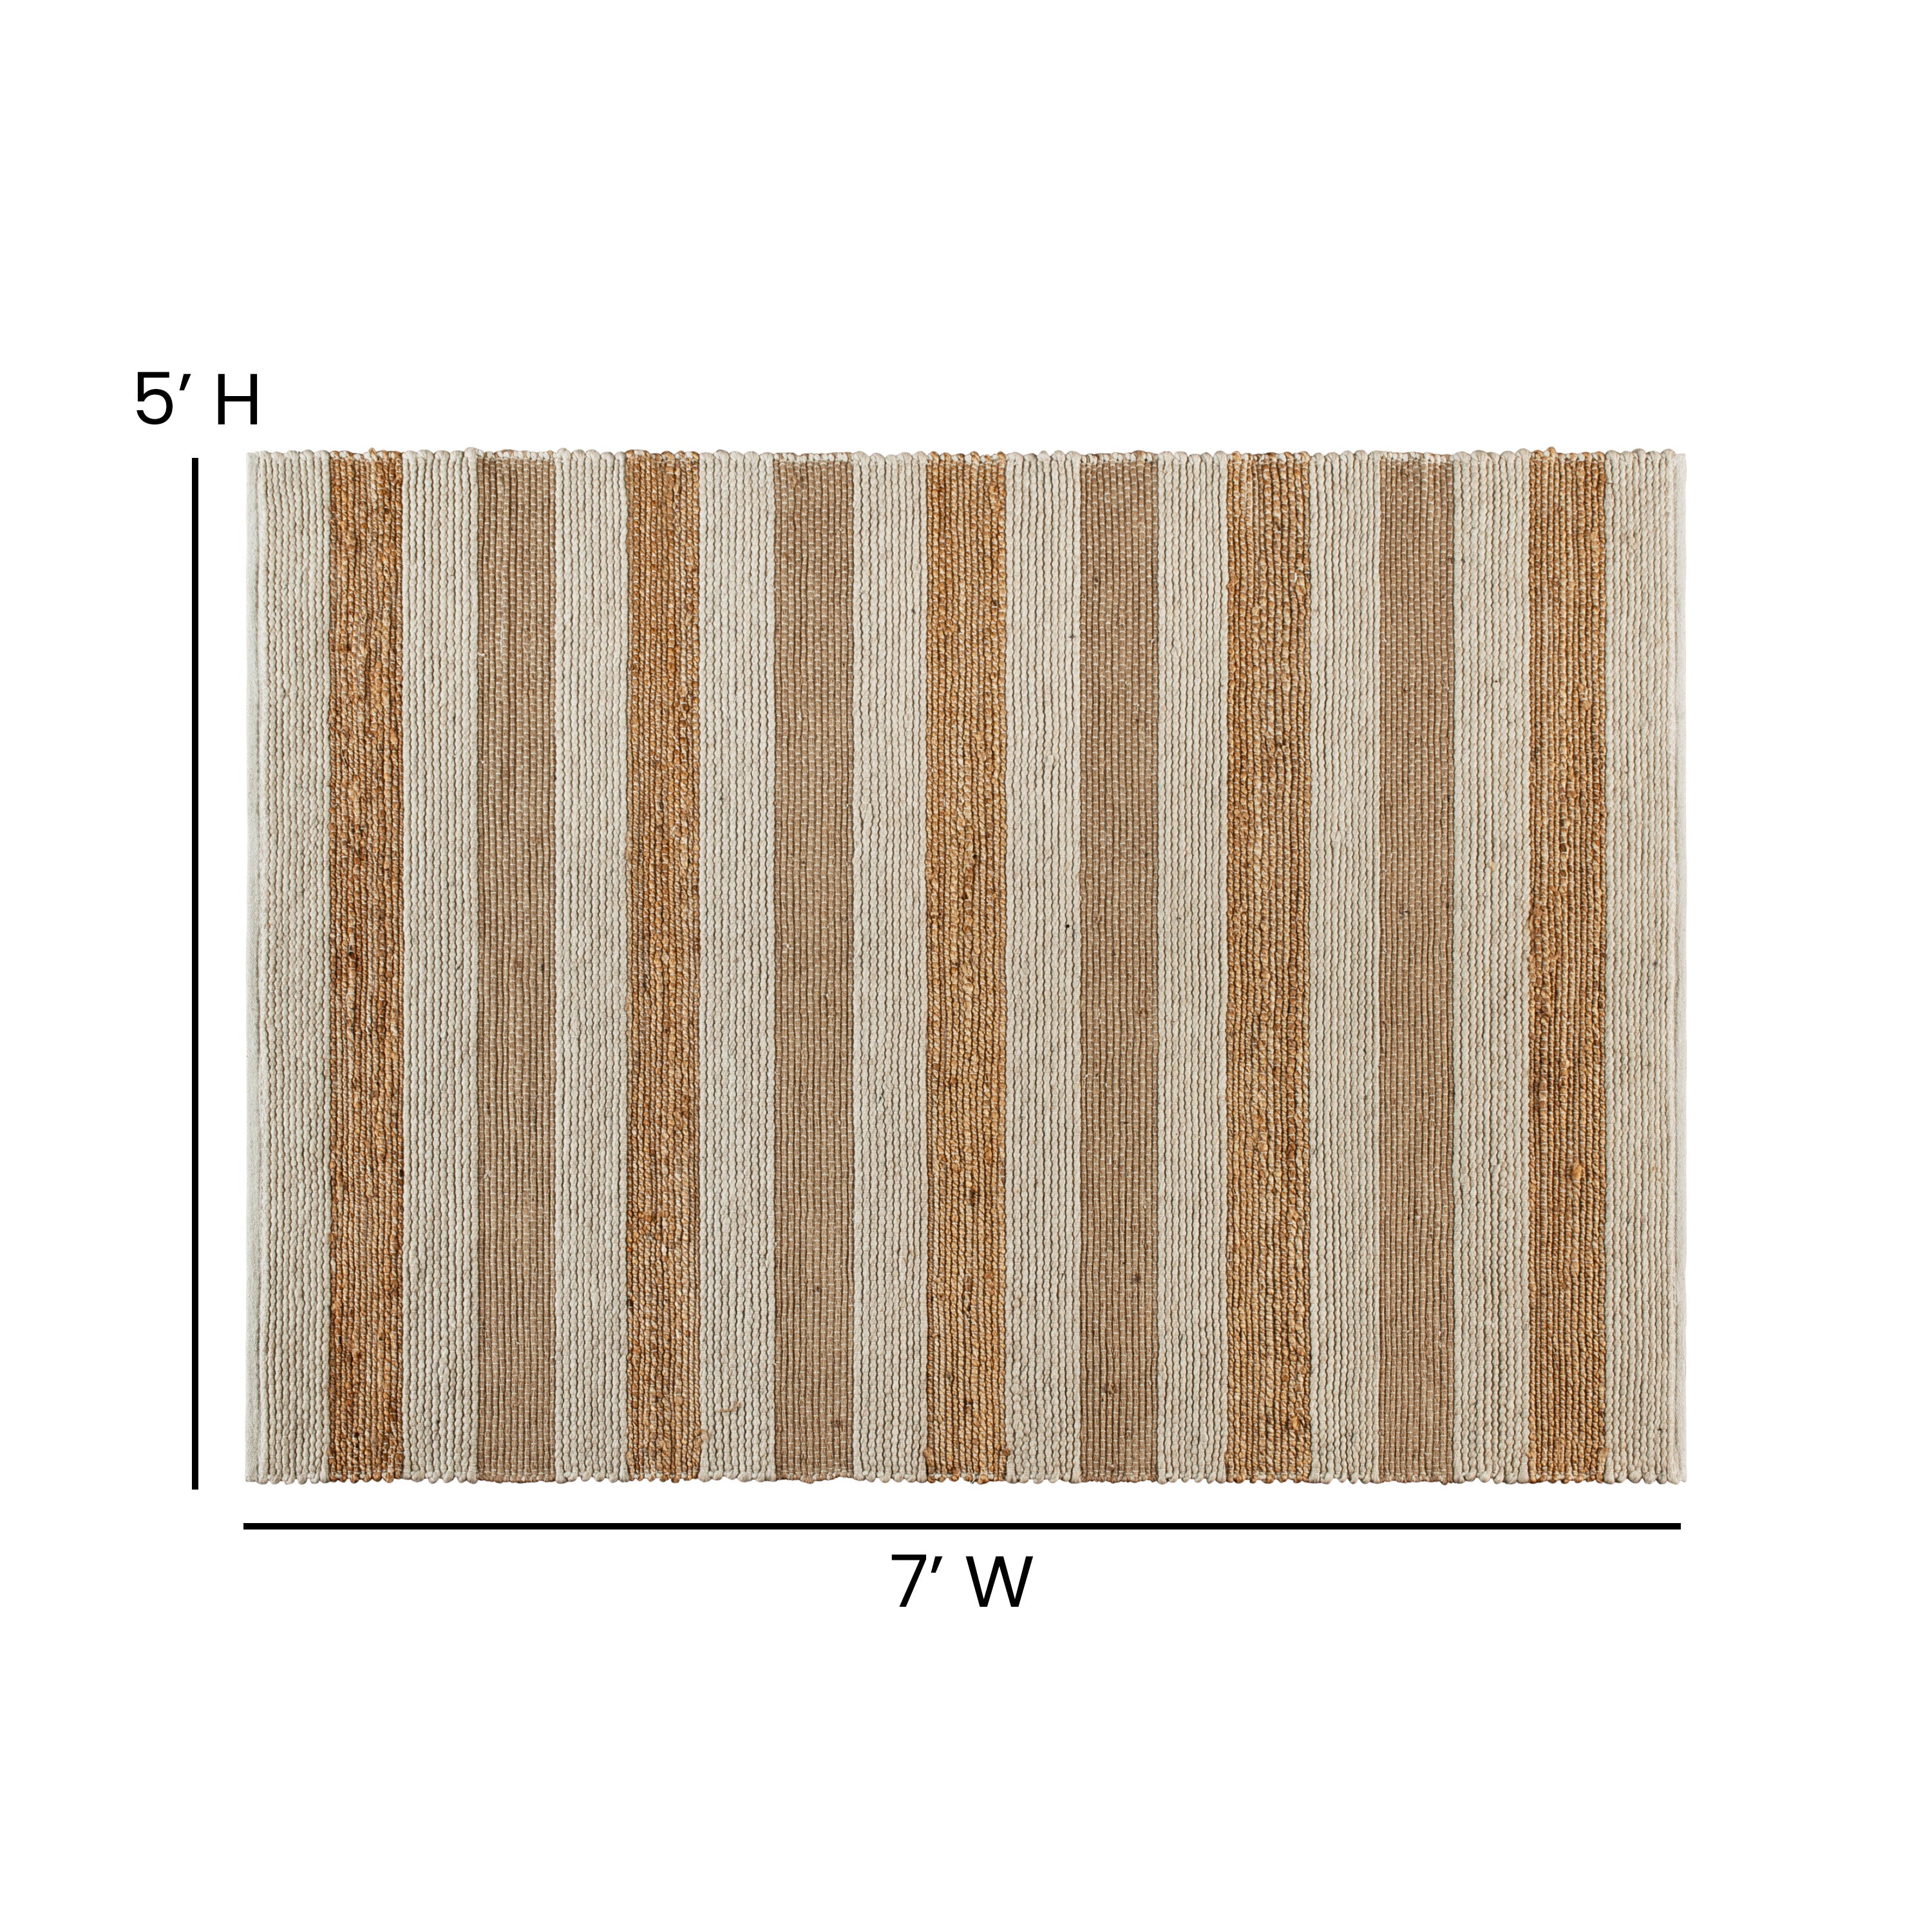 Handwoven Striped Jute Blend Area Rug in Tones-Indoor Area Rug-Flash Furniture-Wall2Wall Furnishings